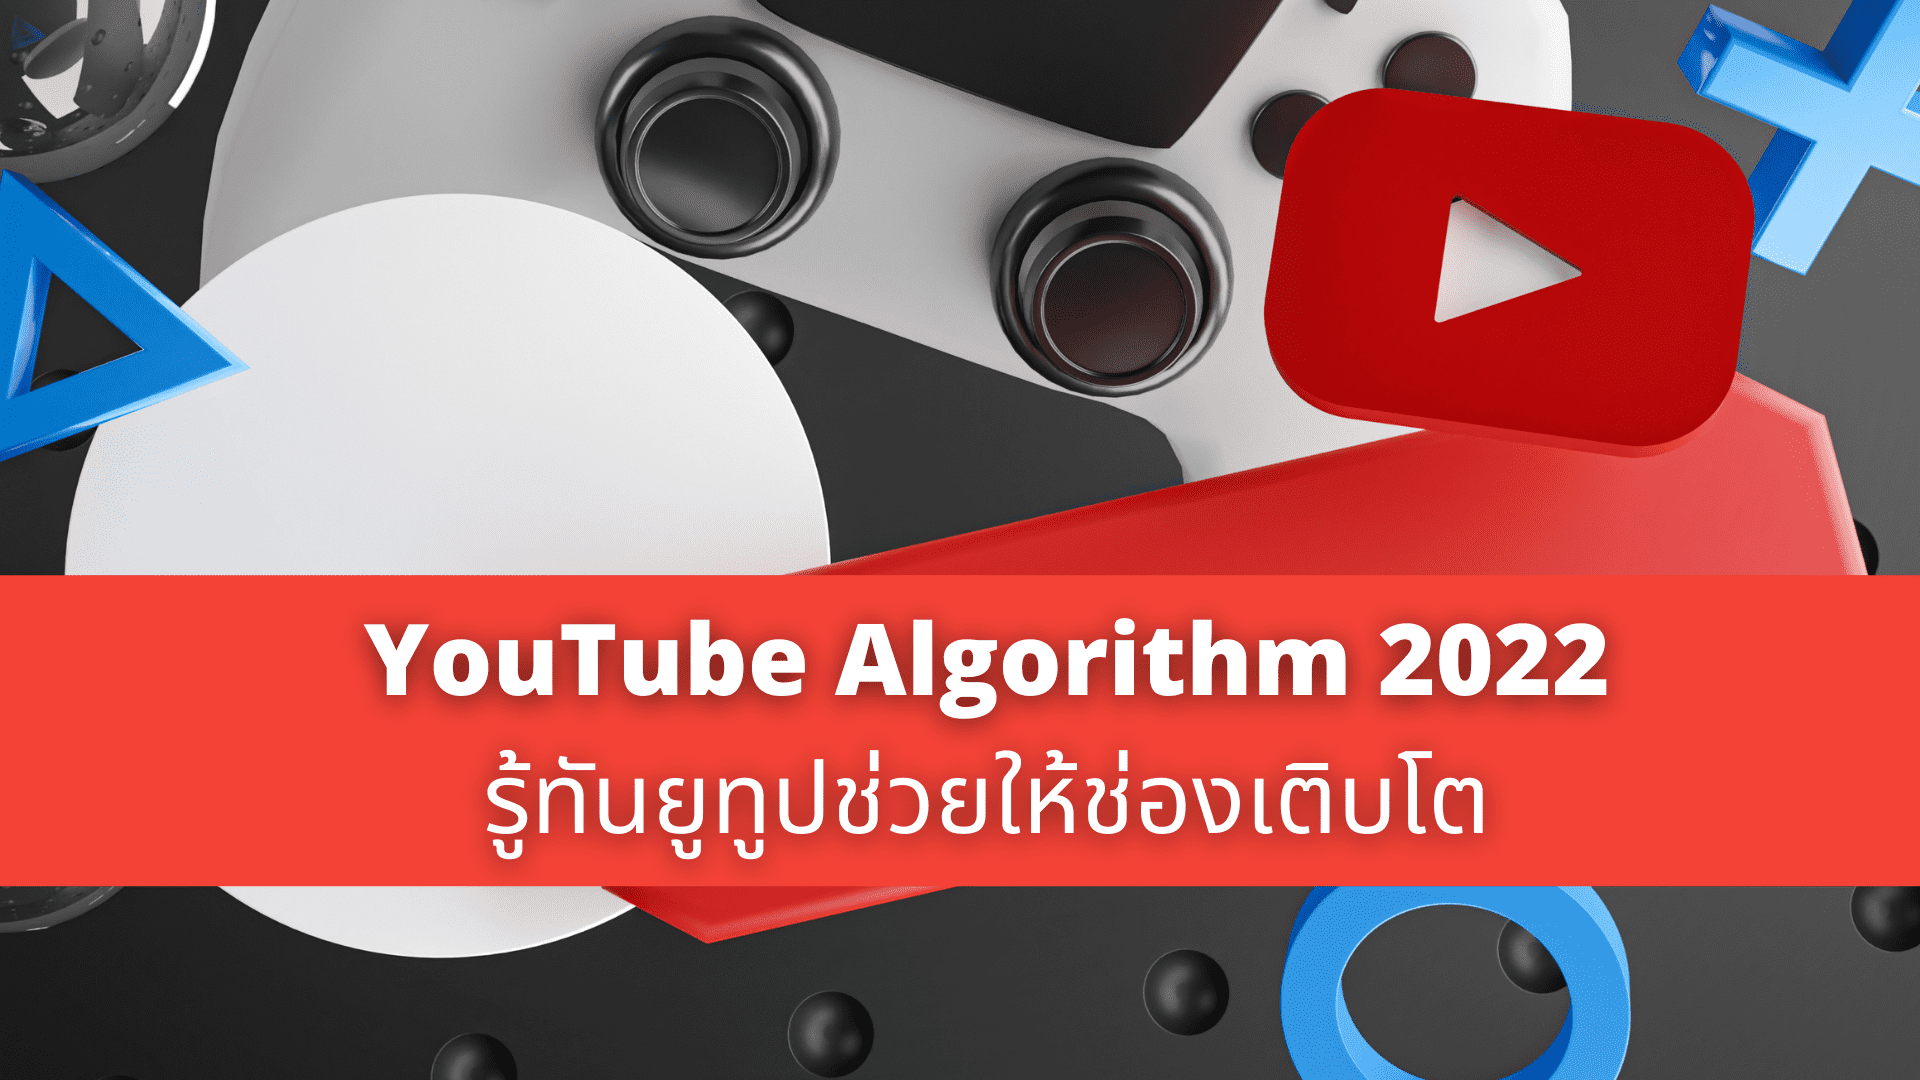 YouTube Algorithm 2022 รู้ทันยูทูปช่วยให้ช่องเติบโต